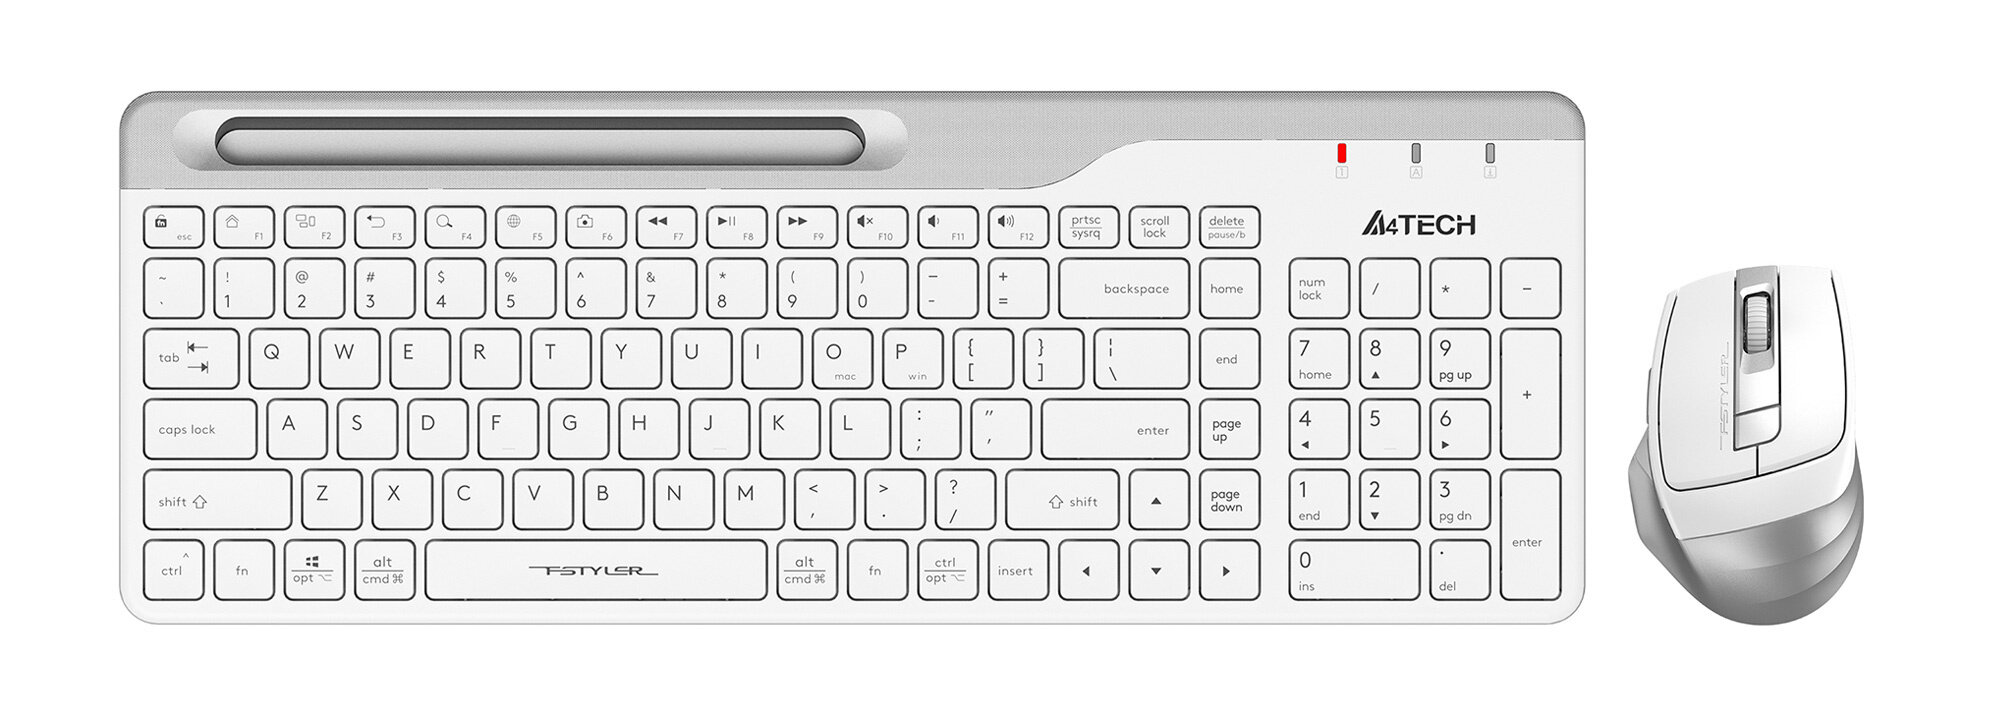 Клавиатура + мышь A4Tech Fstyler FB2535C клавиатура: белый/серый мышь: белый/серый USB беспроводная Bluetooth/Радио slim